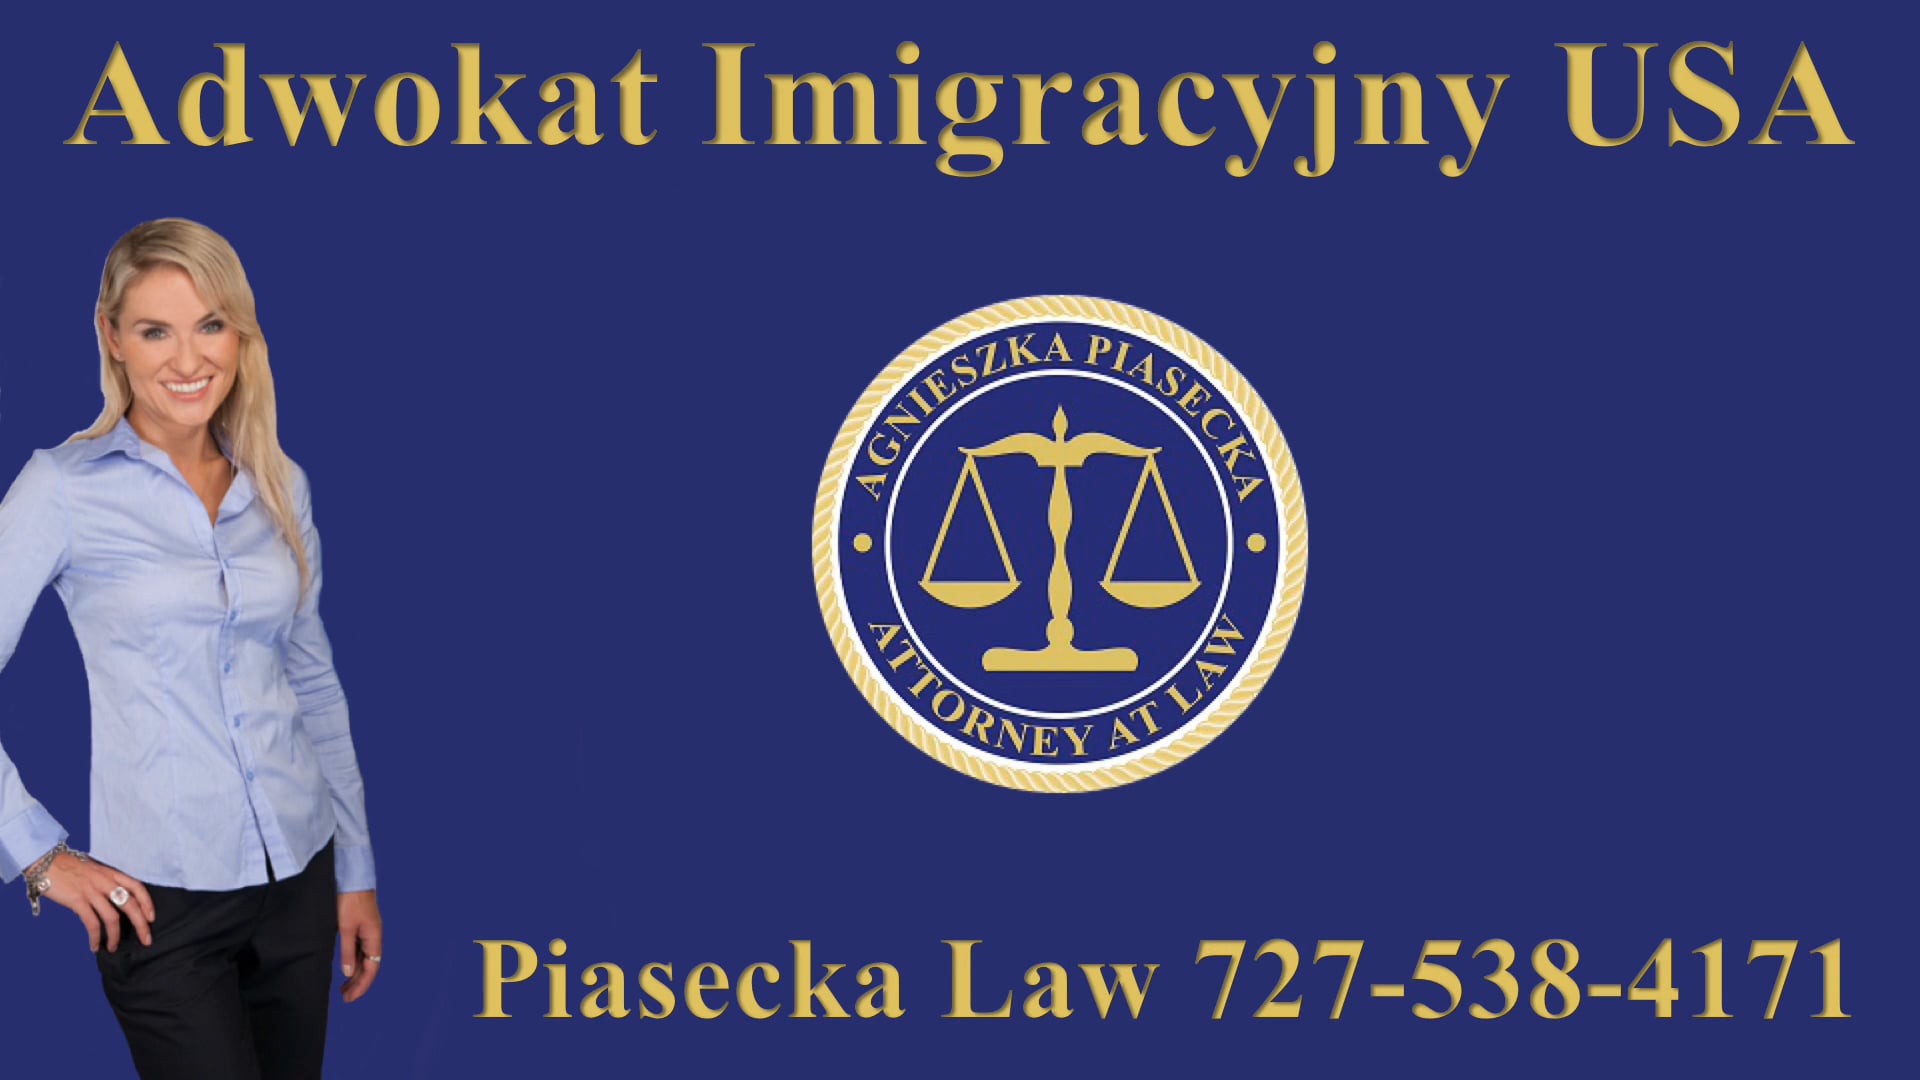 piasecka-law-727-538-4171-adwokat-imigracyjny-usa-on-vimeo